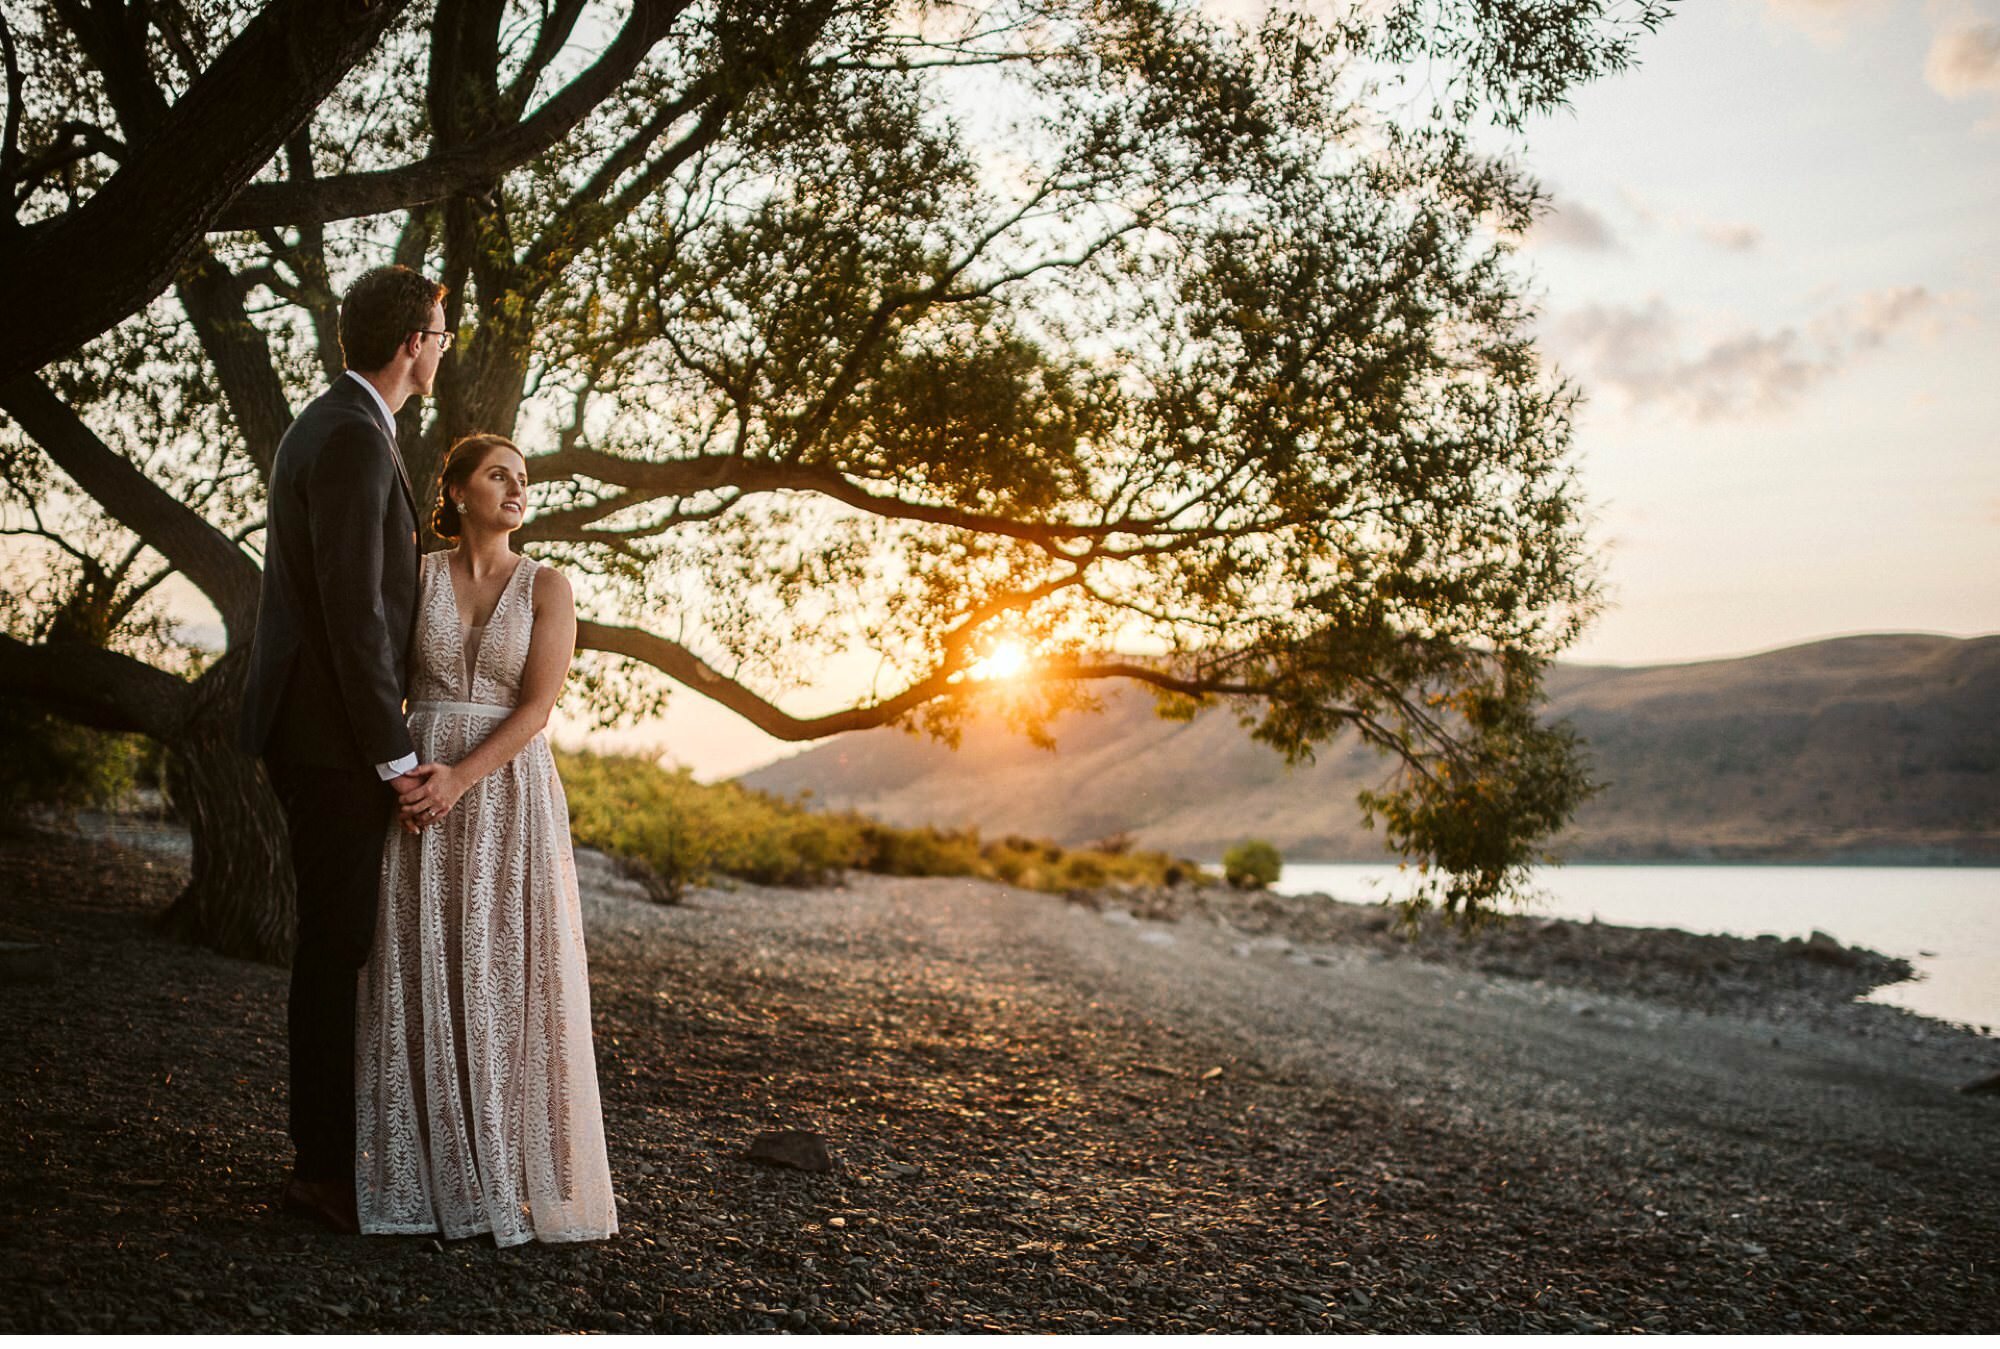 019 - New Zealand Wedding Photography Highlights.jpg